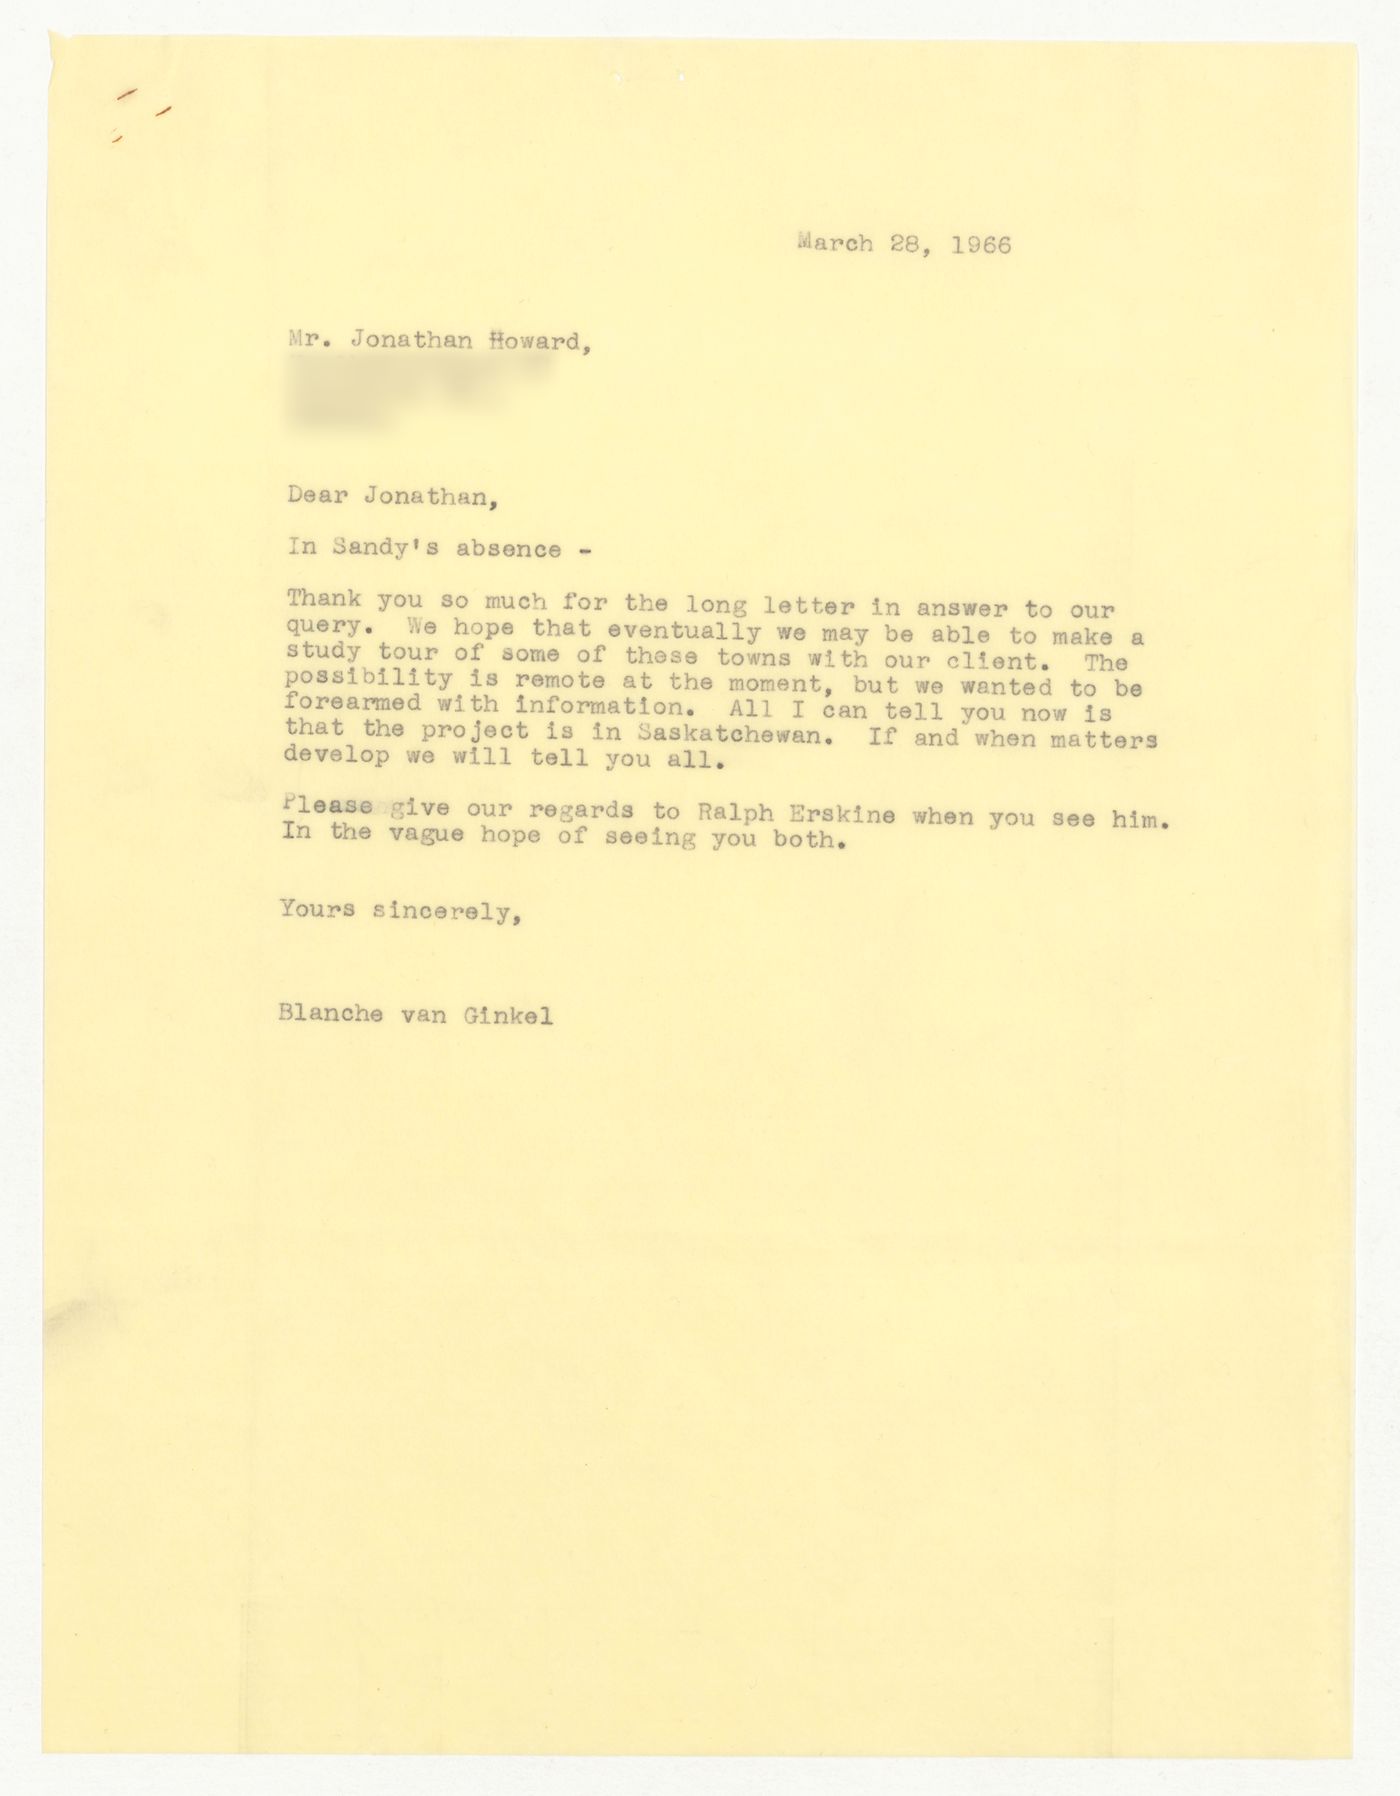 Letter from Blanche van Ginkel to Jonathan Howard about Esterhazy, Saskatchewan